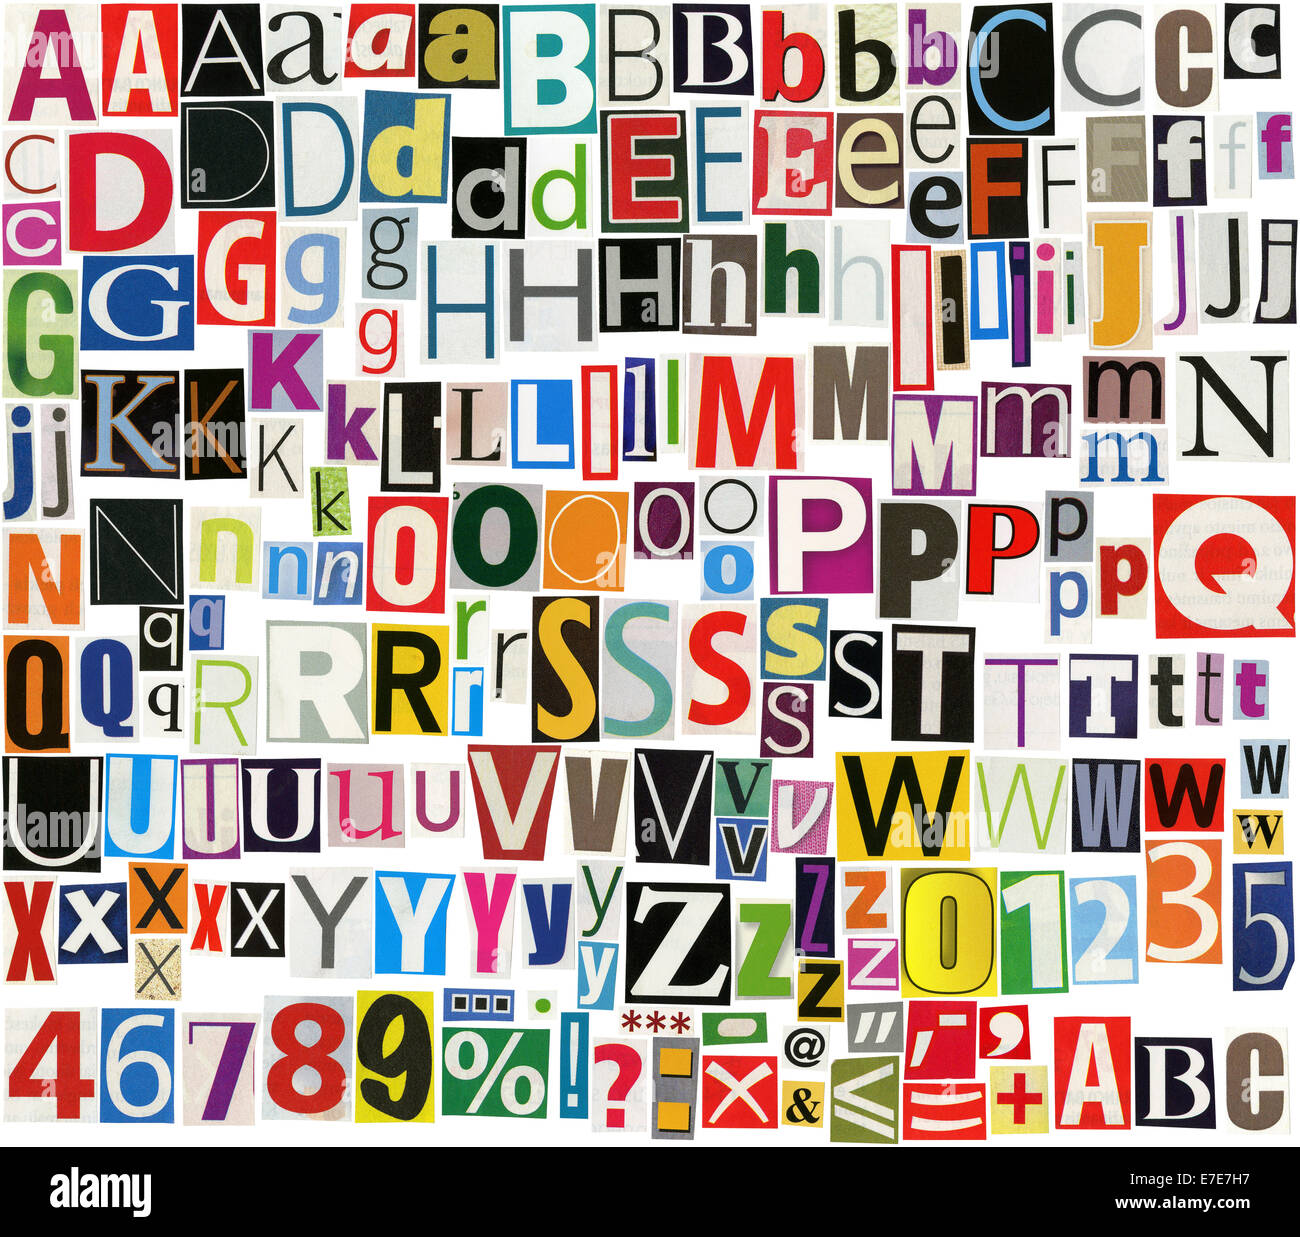 big-size-newspaper-magazine-alphabet-with-letters-pin-on-alphabet-letter-displays-clark-cochran